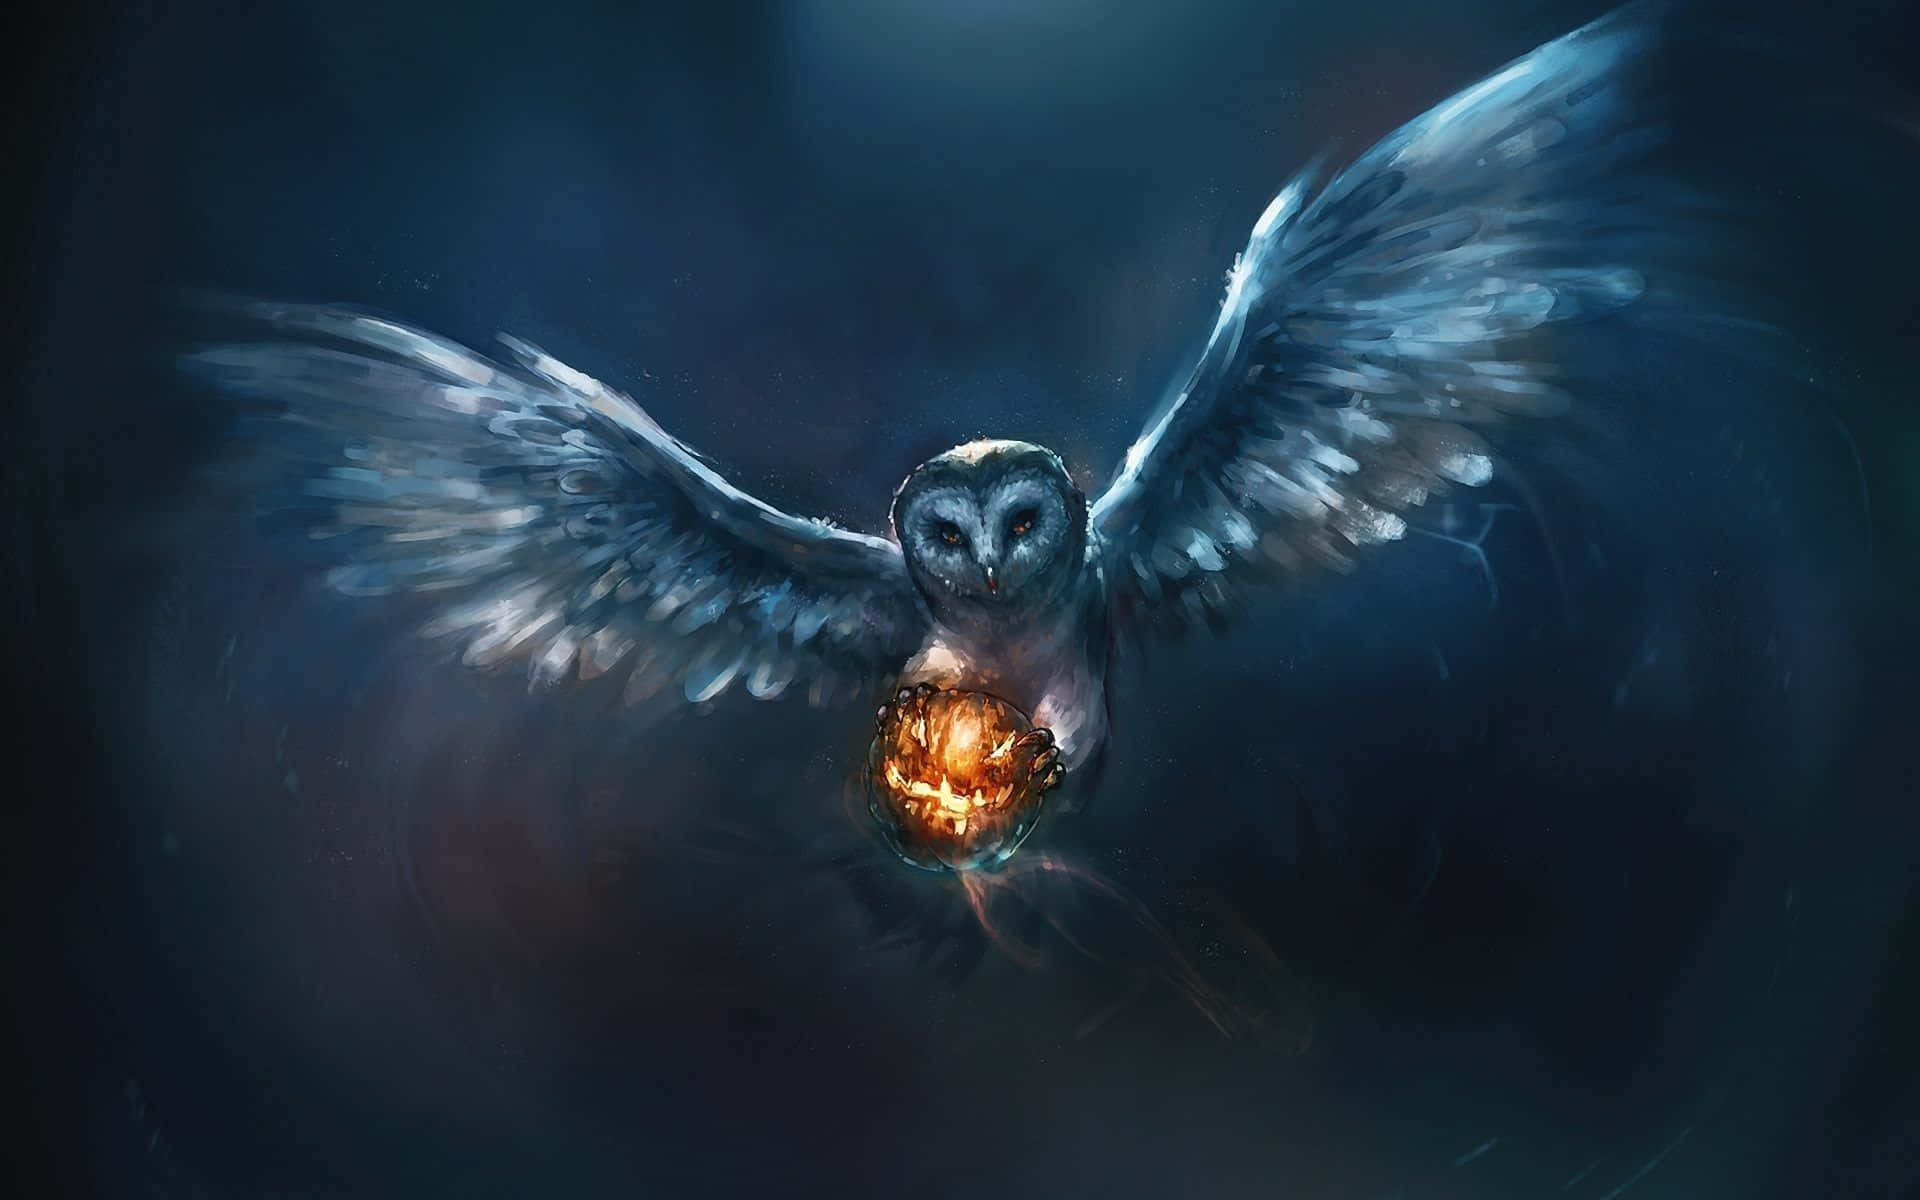 Blue Owl Background